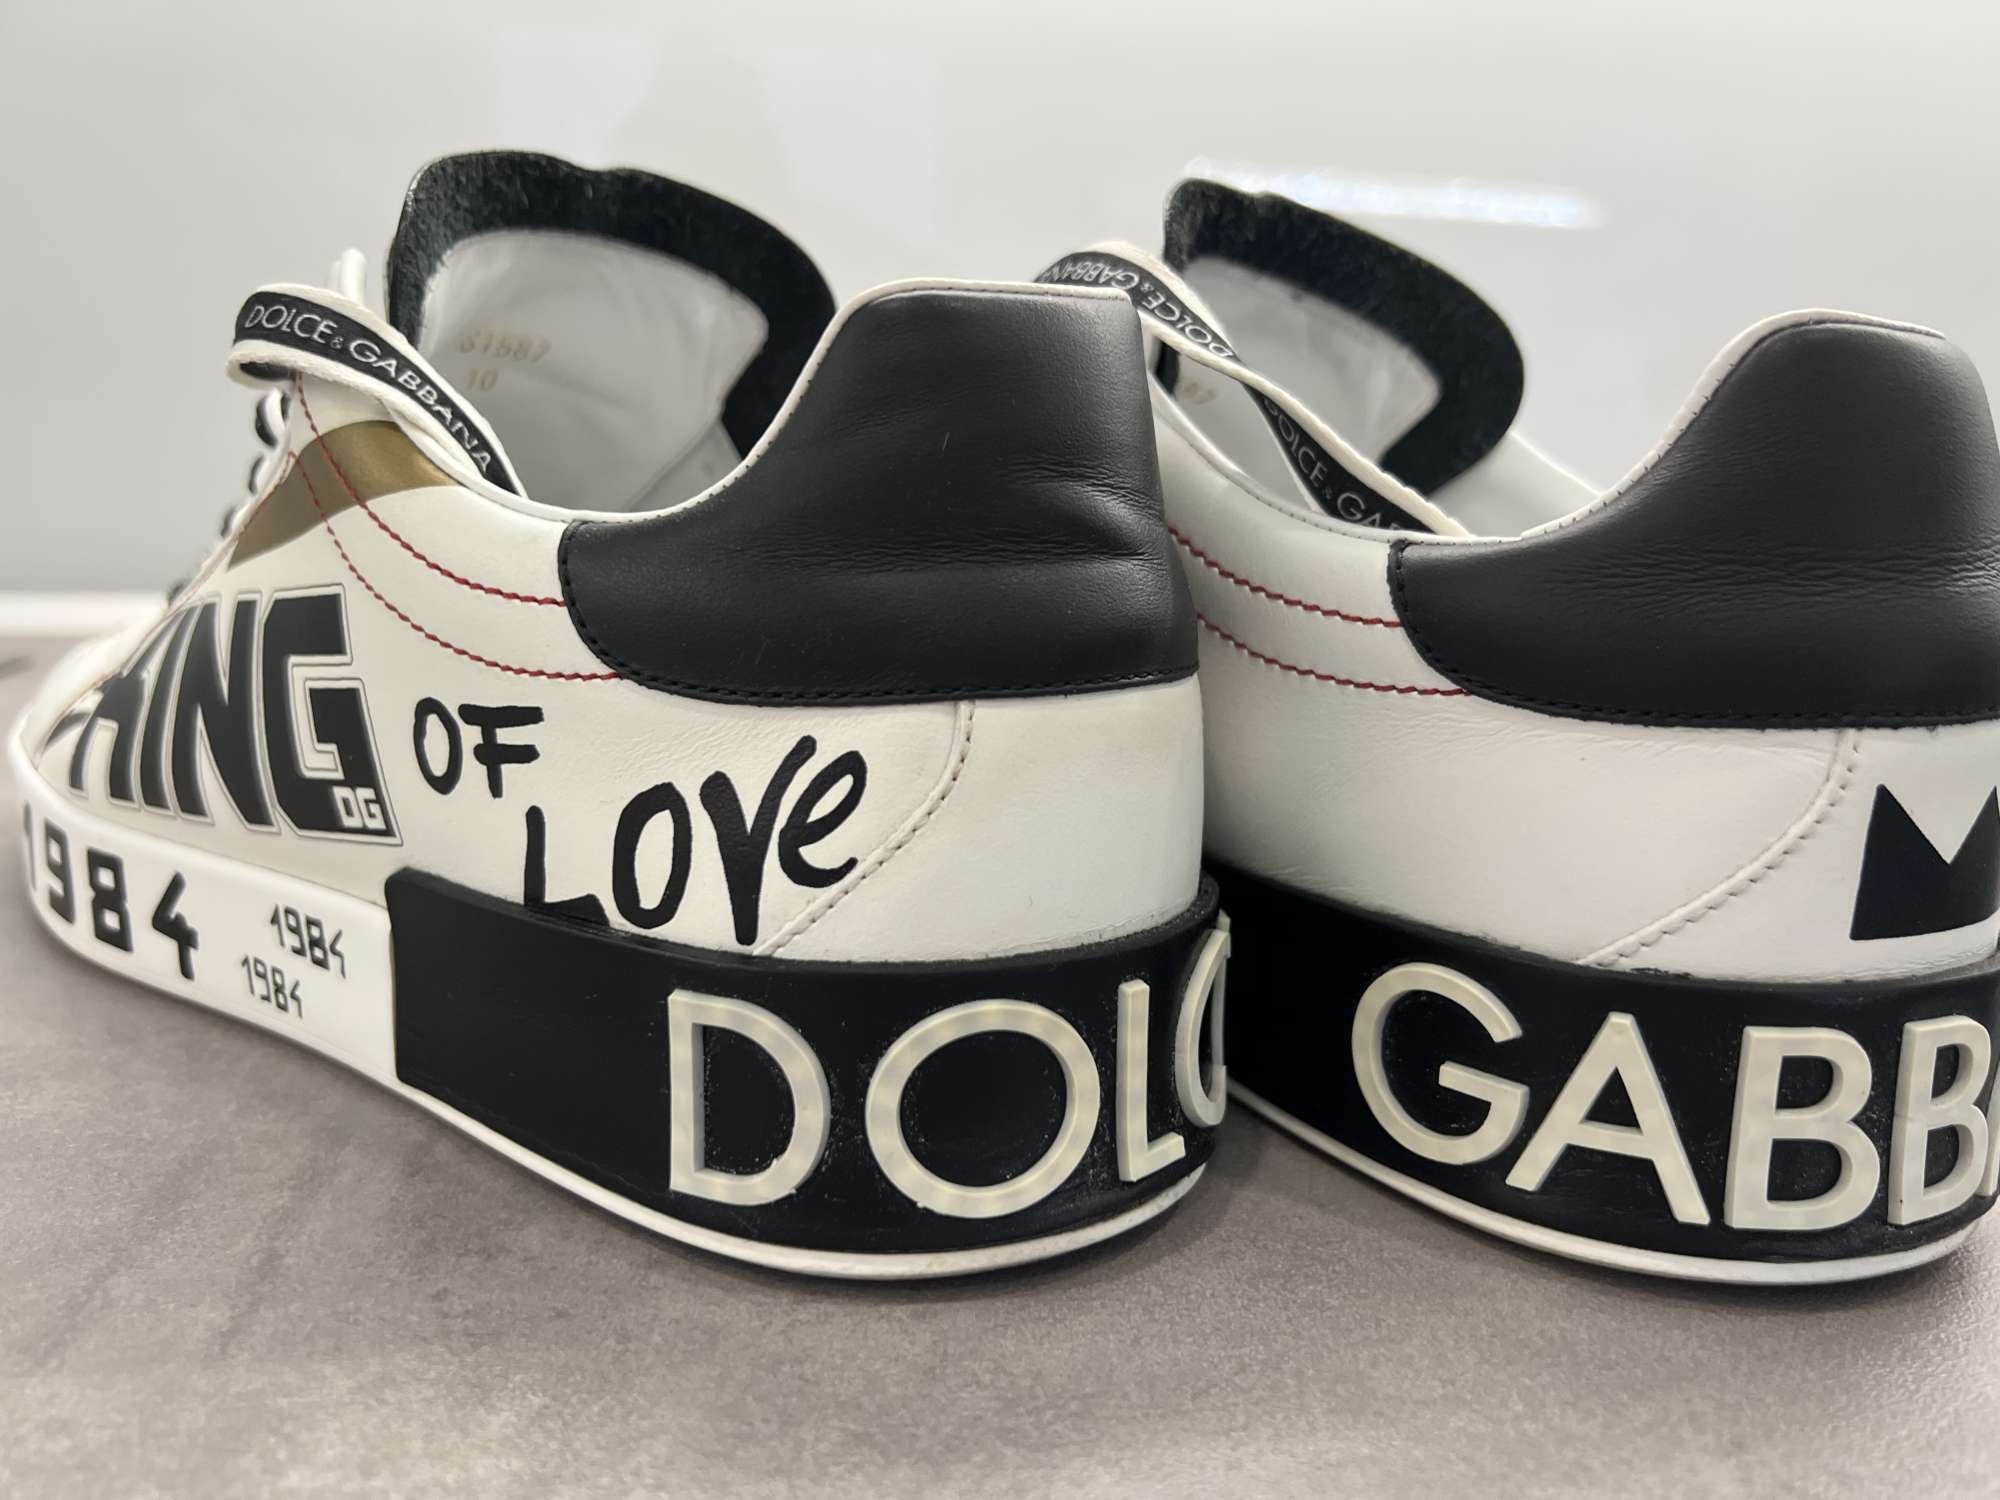 Dolce & Gabbana panske tenisky velkost 44